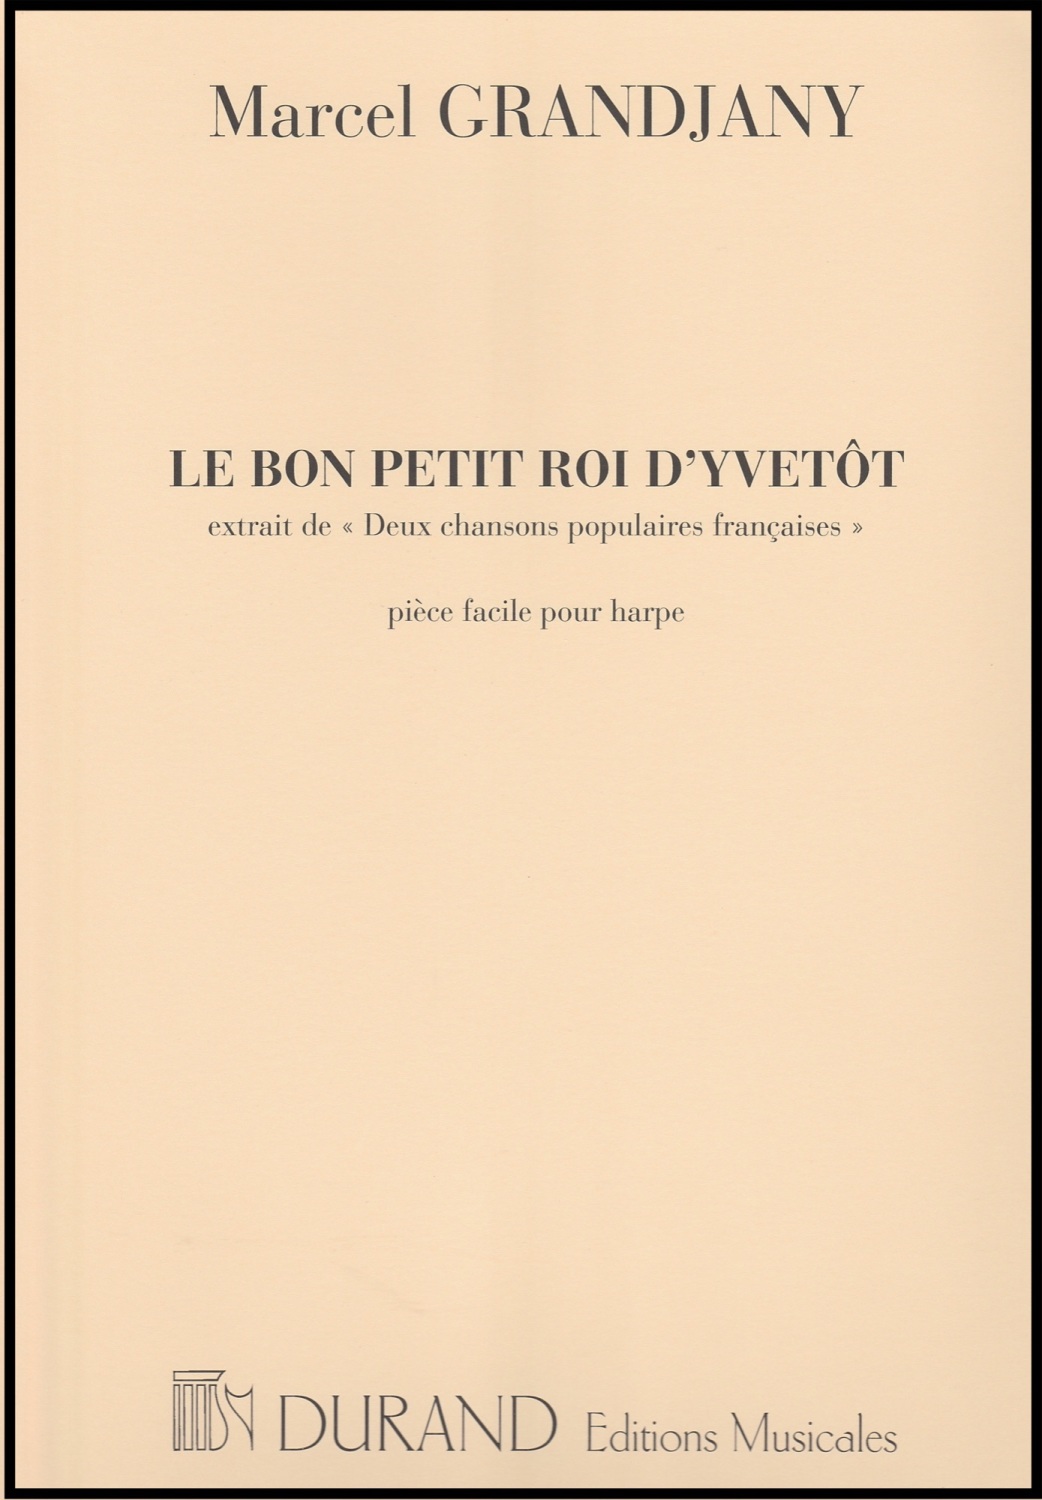 Le Bon Petit Roi D'Yvetot - Marcel Grandjany